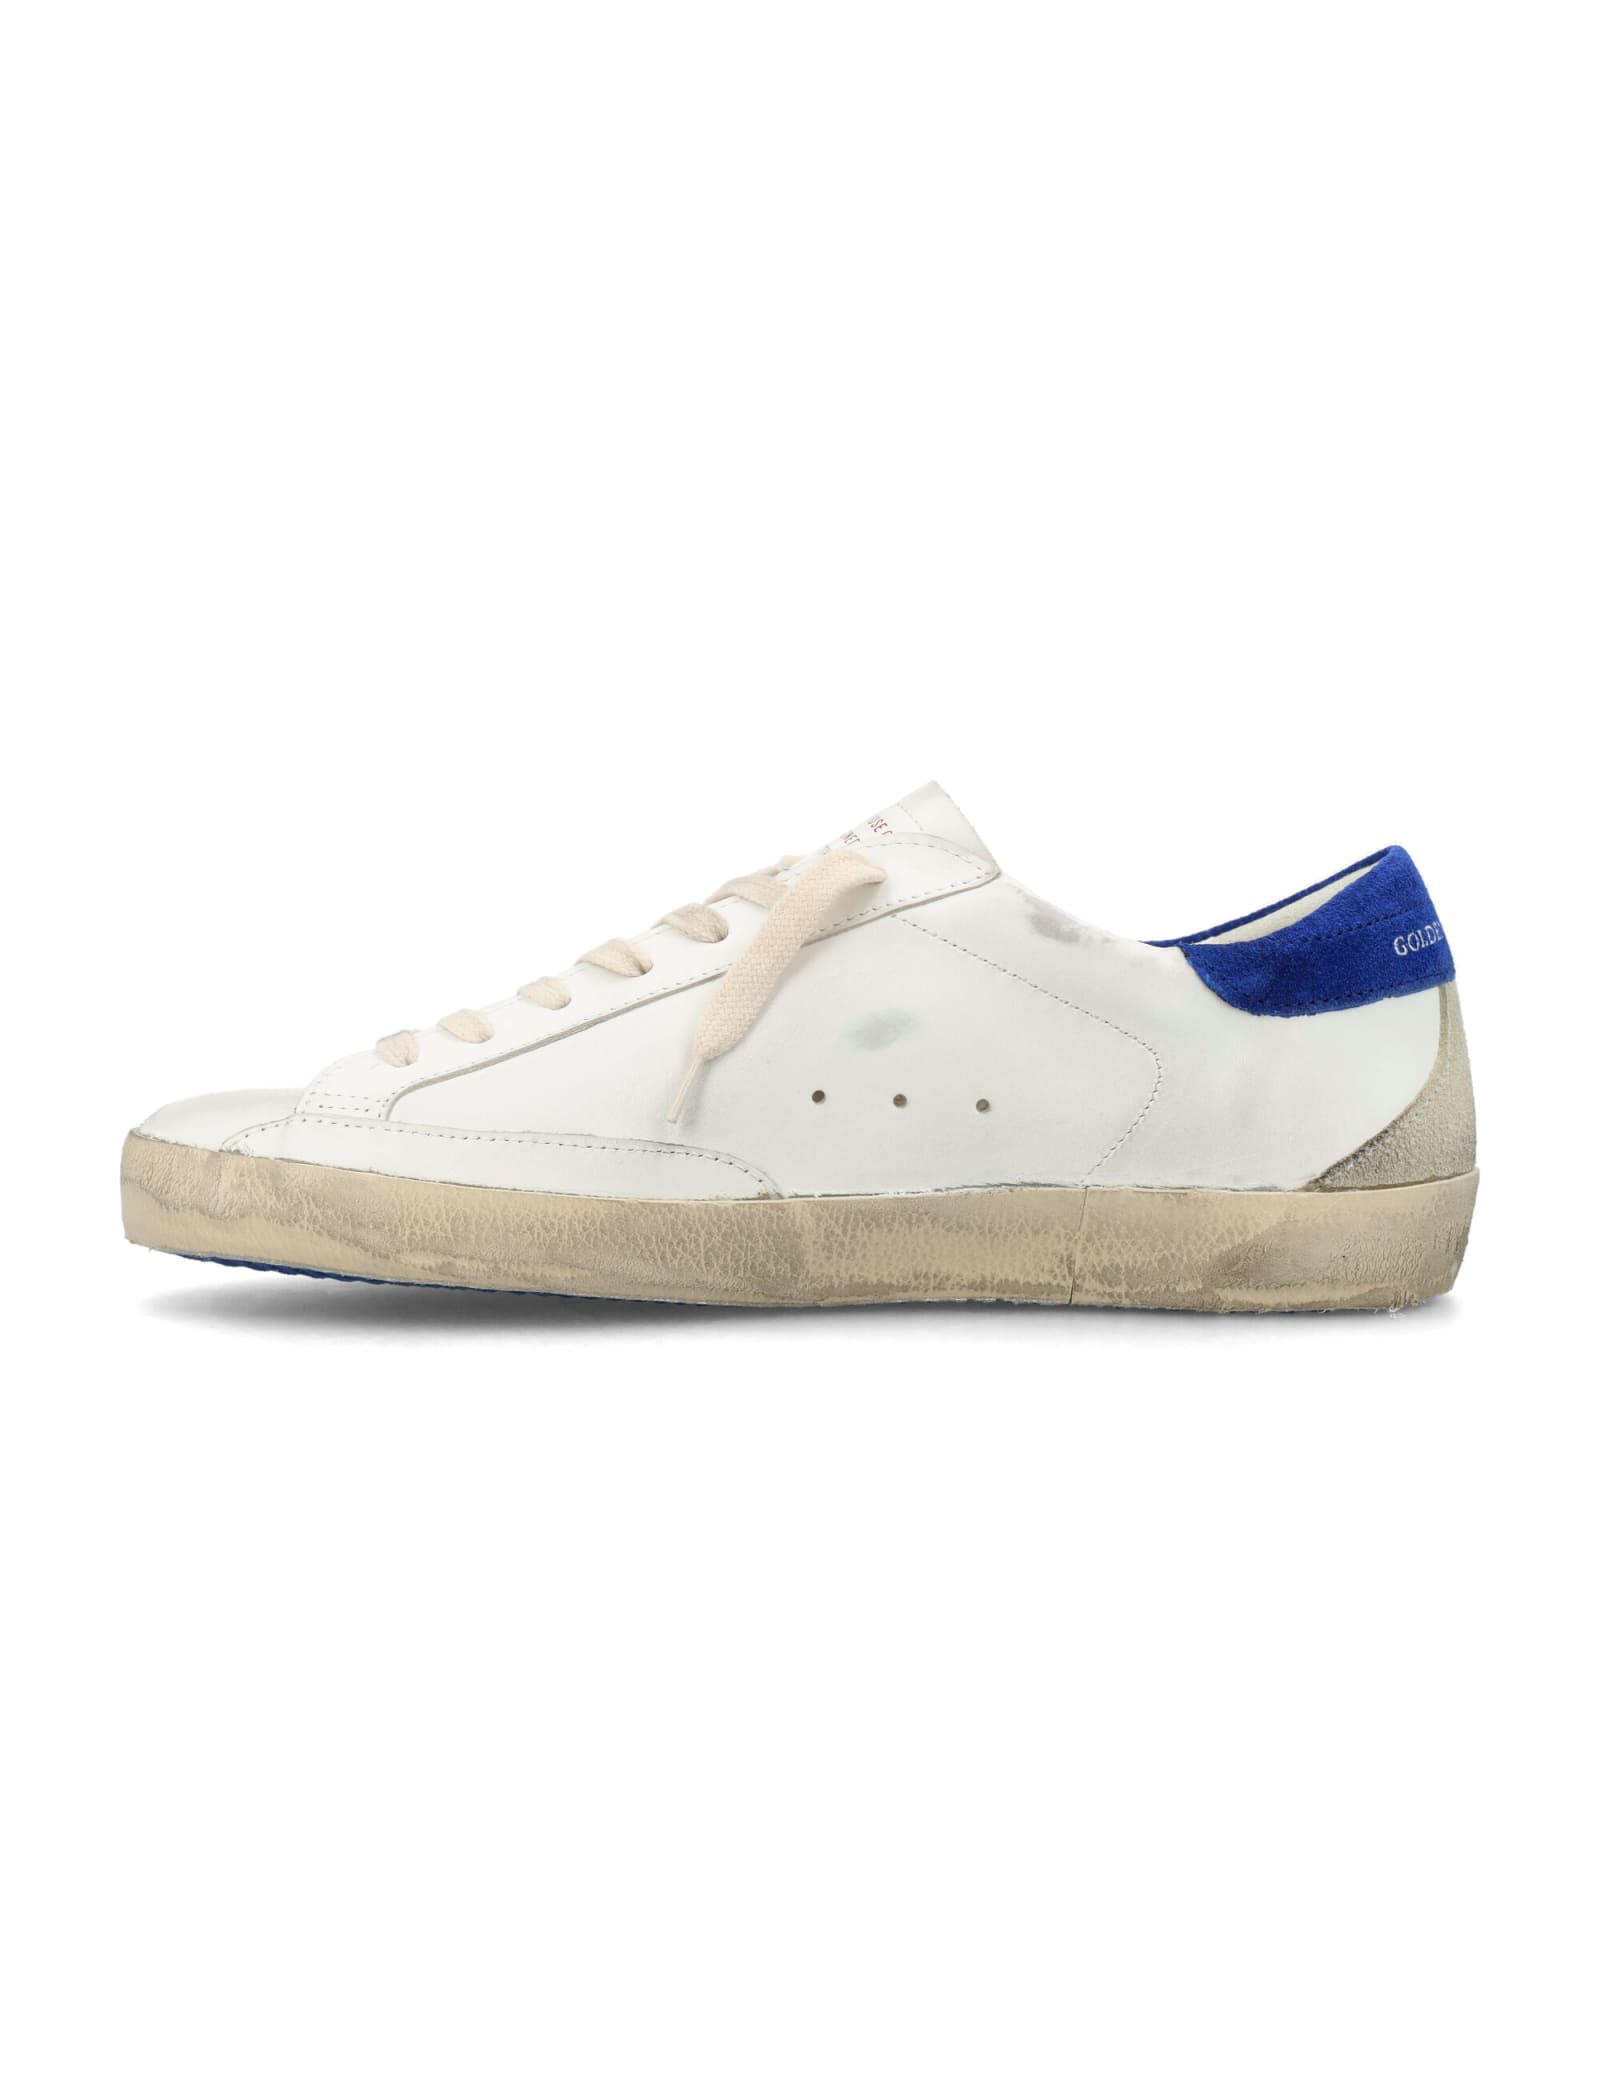 Shop Golden Goose Superstar Sneakers In White Blue